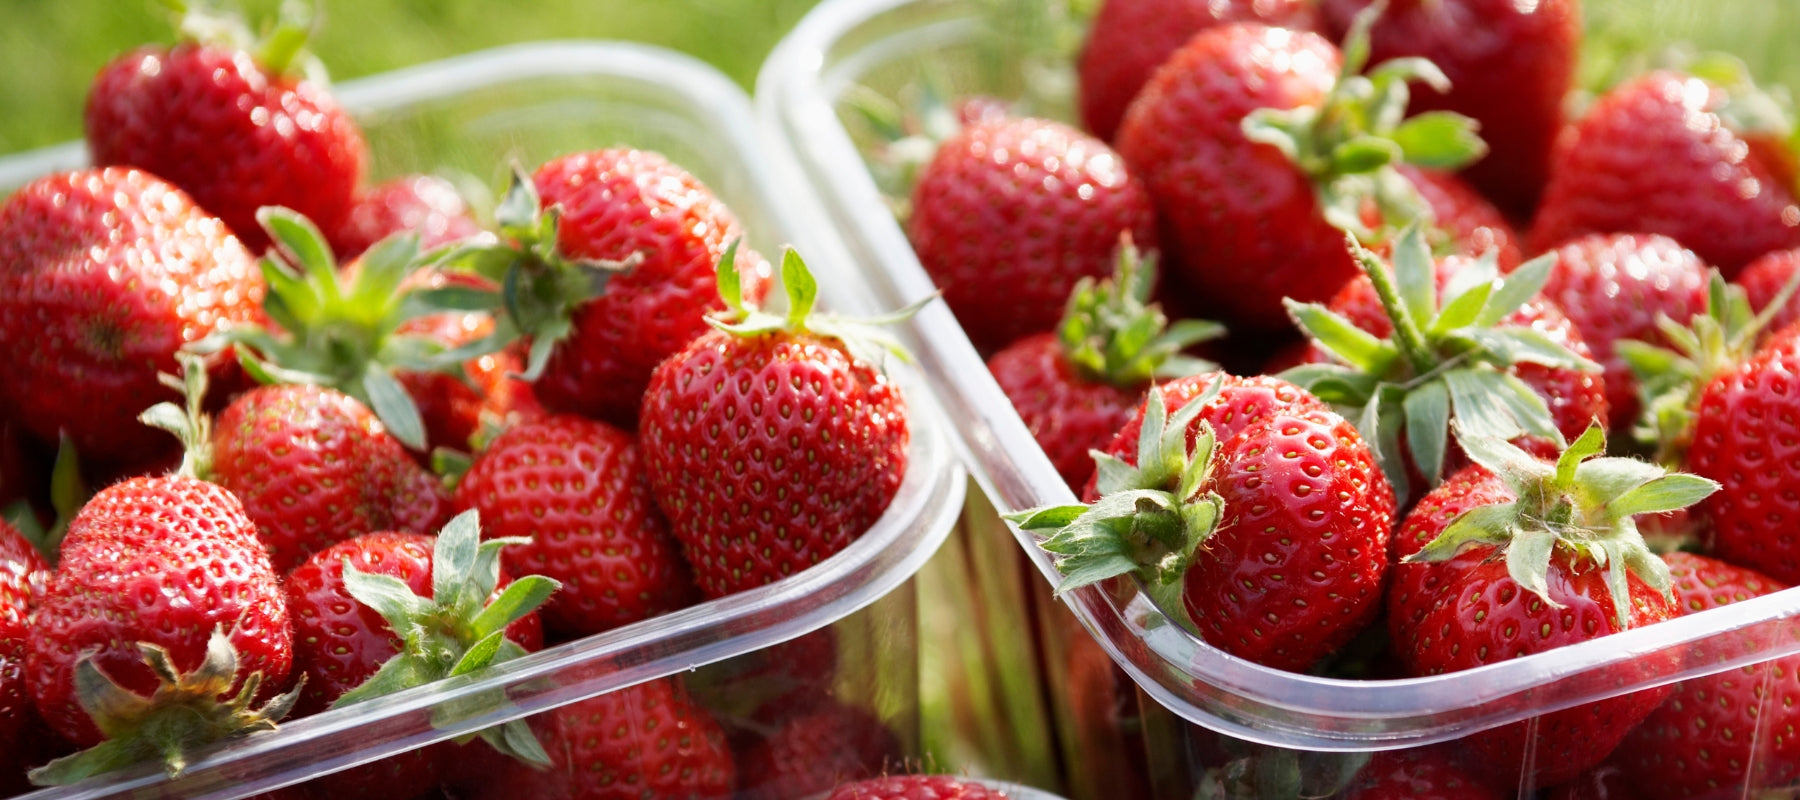 How safe is the fruit and veg on supermarket shelves?